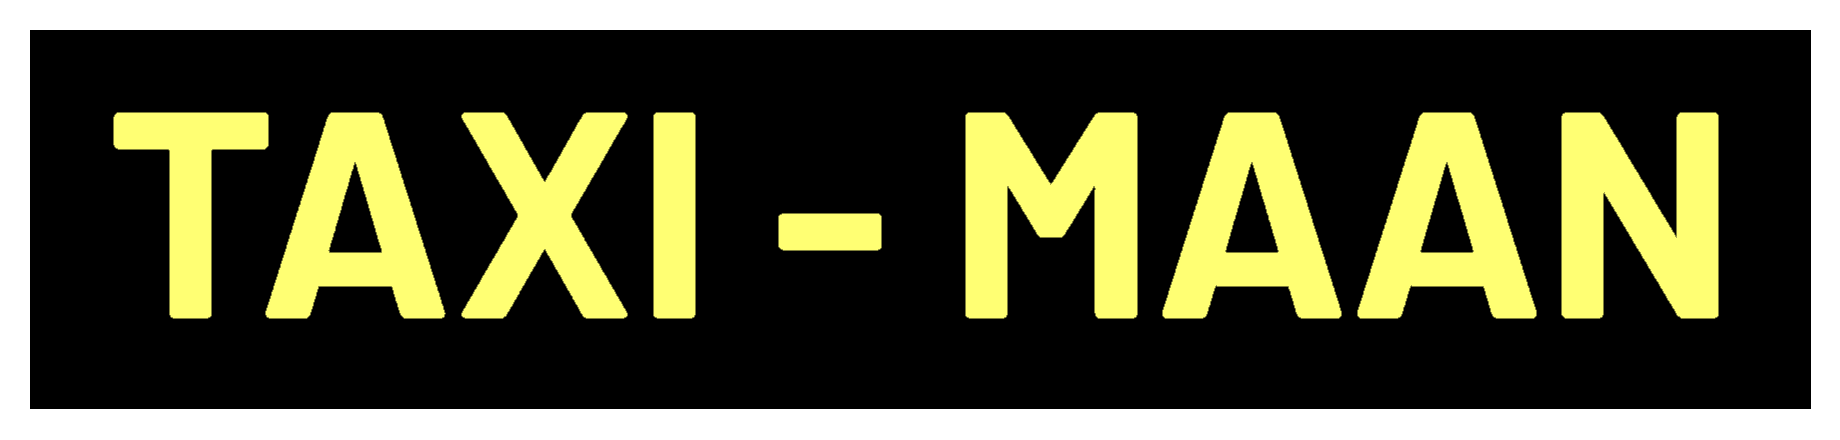 Taxi Maan Logo